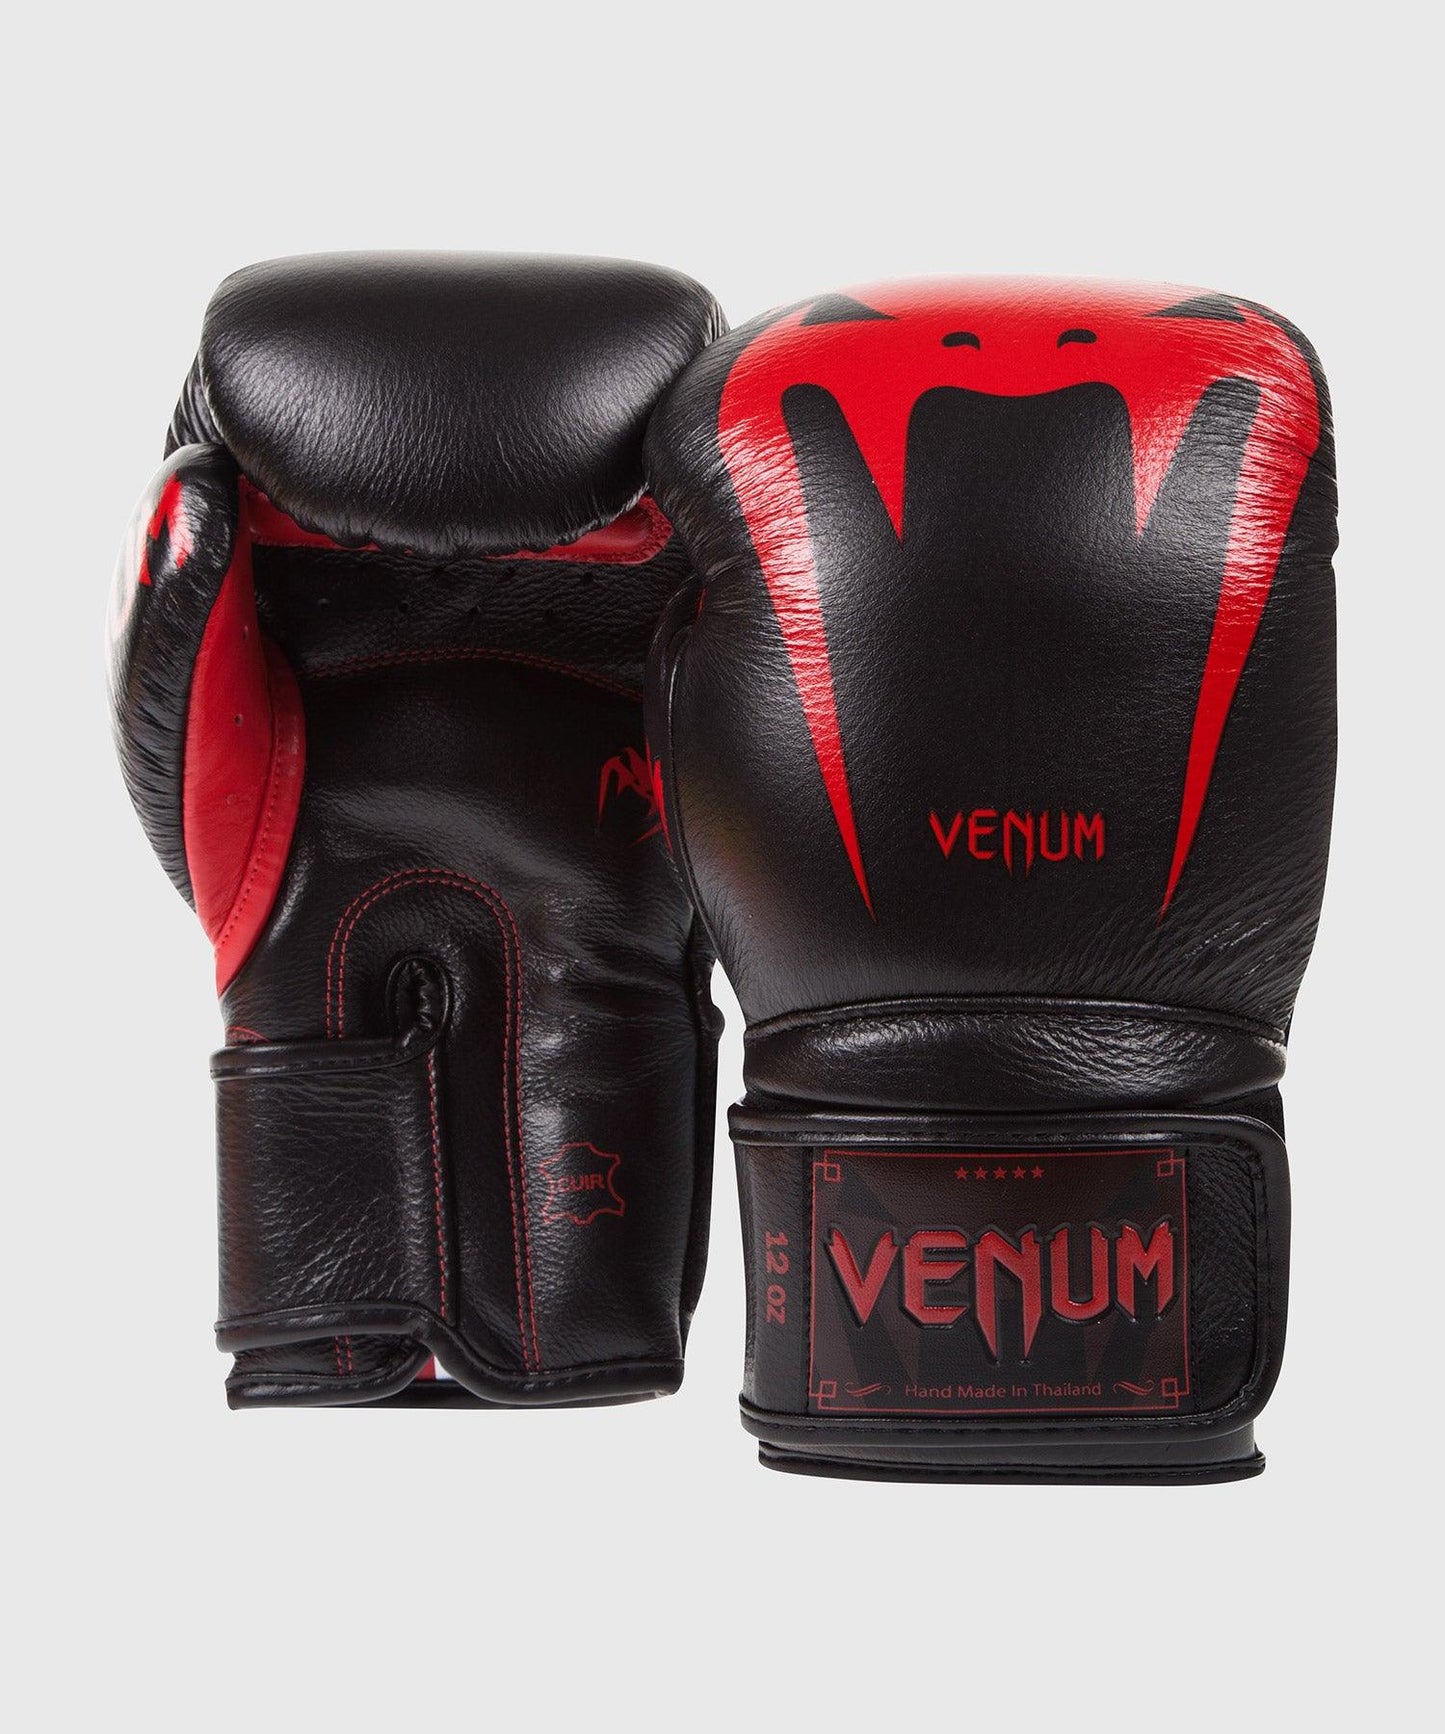 Venum Giant 3.0 Boxing Gloves - Nappa Leather - Black Devil Picture 2